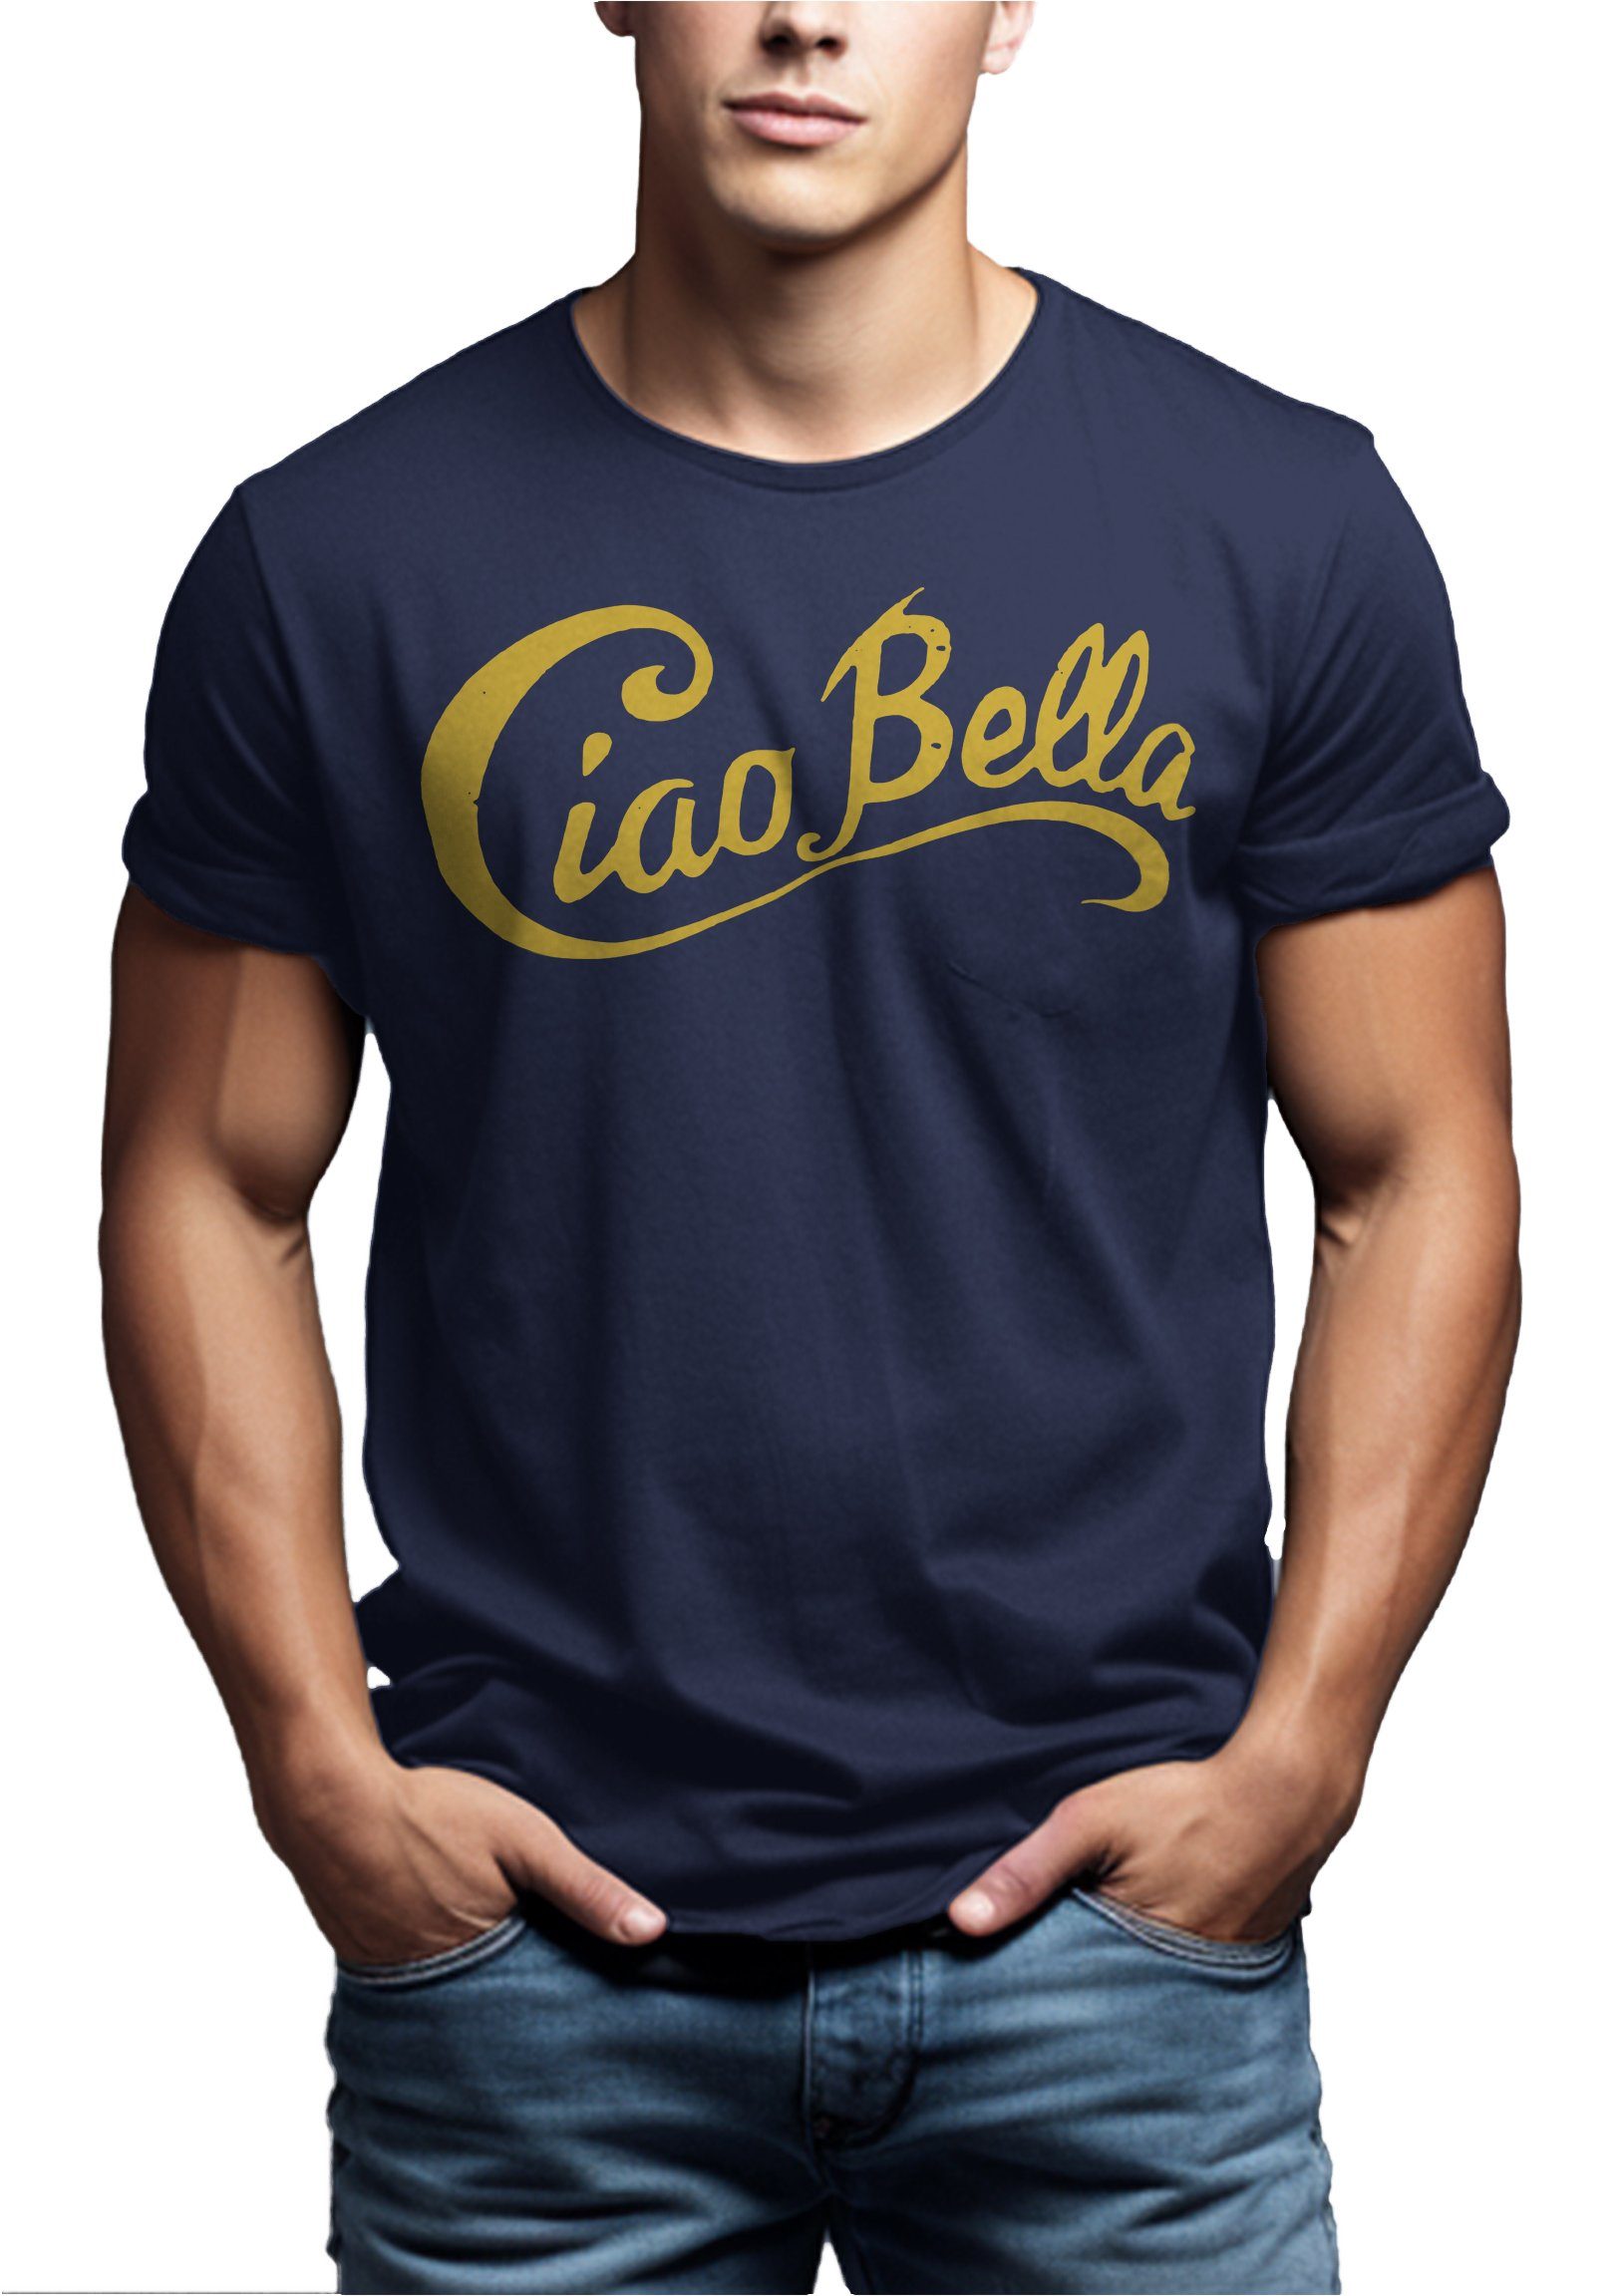 MAKAYA Print-Shirt Coole Herren Bella Italien Logo, Blau Motiv Mode Ciao Style Spruch Italienischer